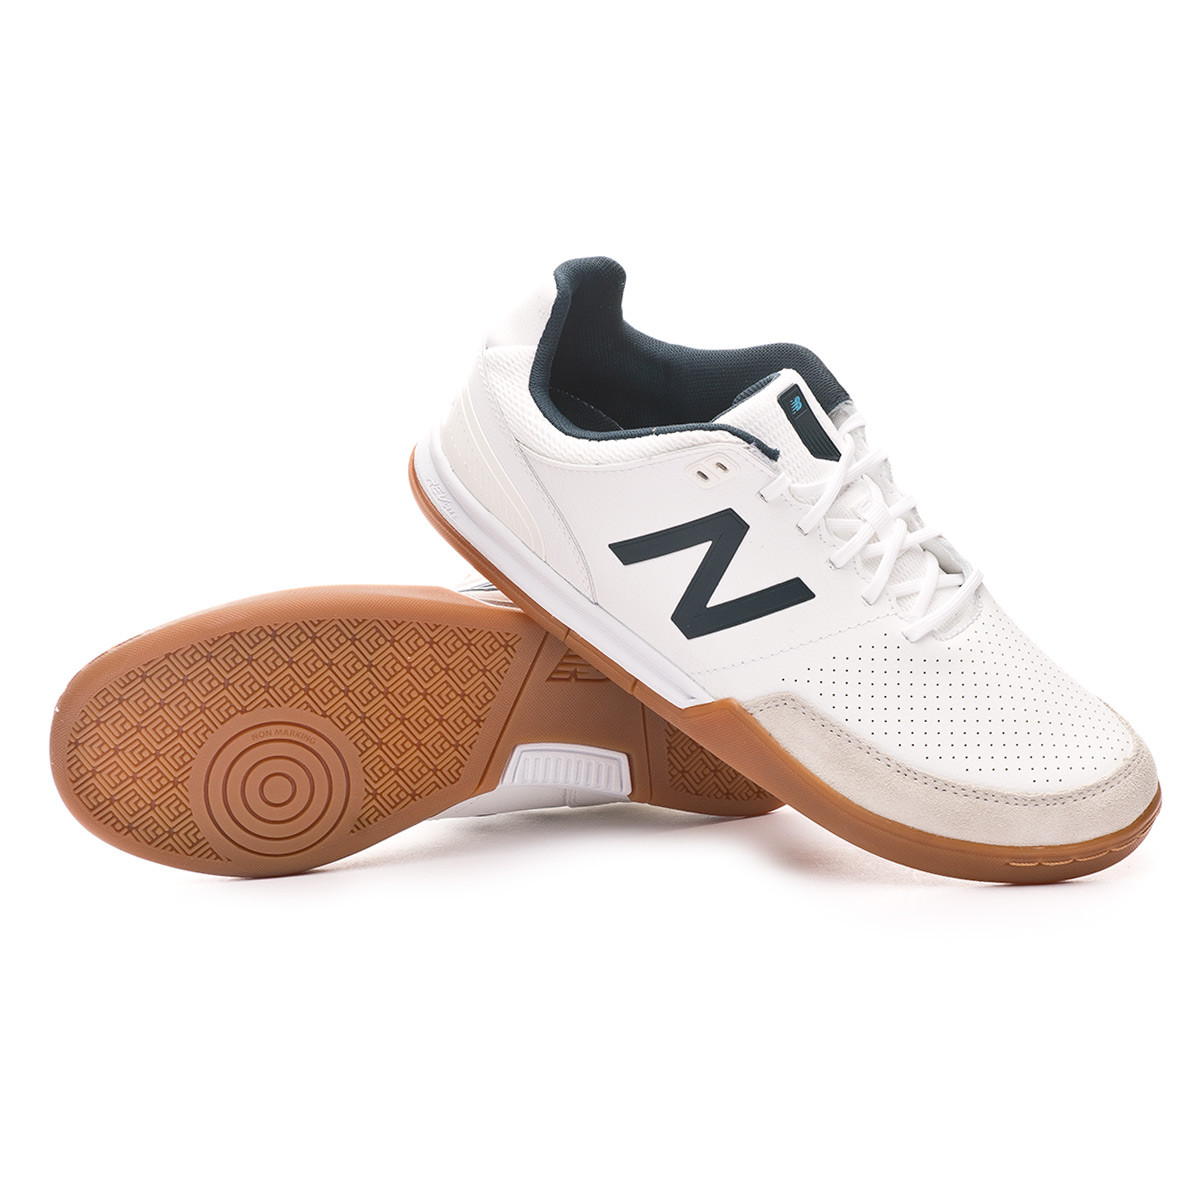 New Balance Audazo v4 Command Futsal Boot